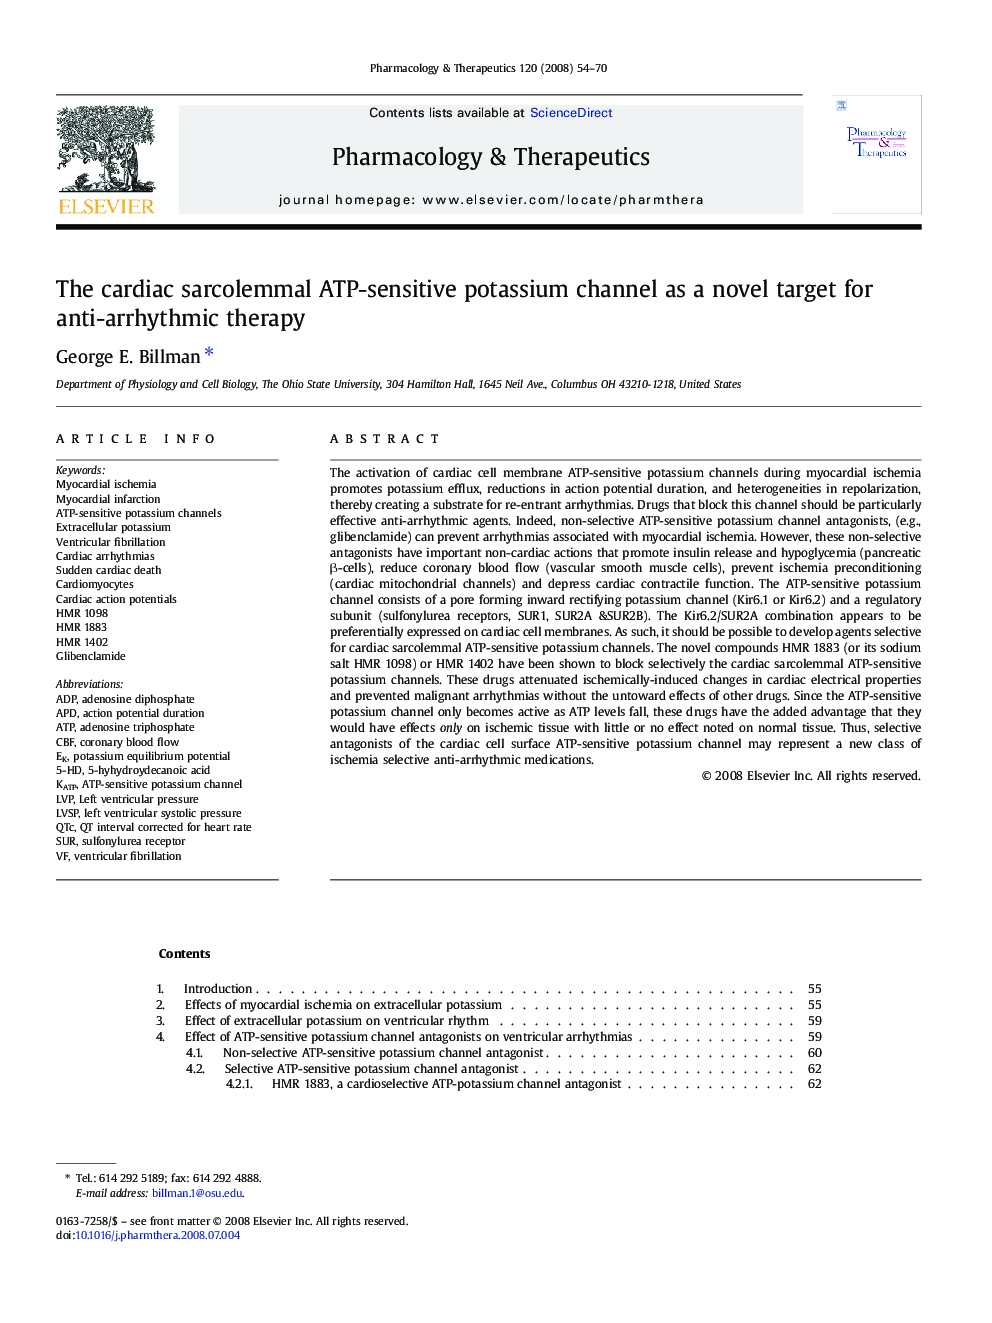 The cardiac sarcolemmal ATP-sensitive potassium channel as a novel target for anti-arrhythmic therapy